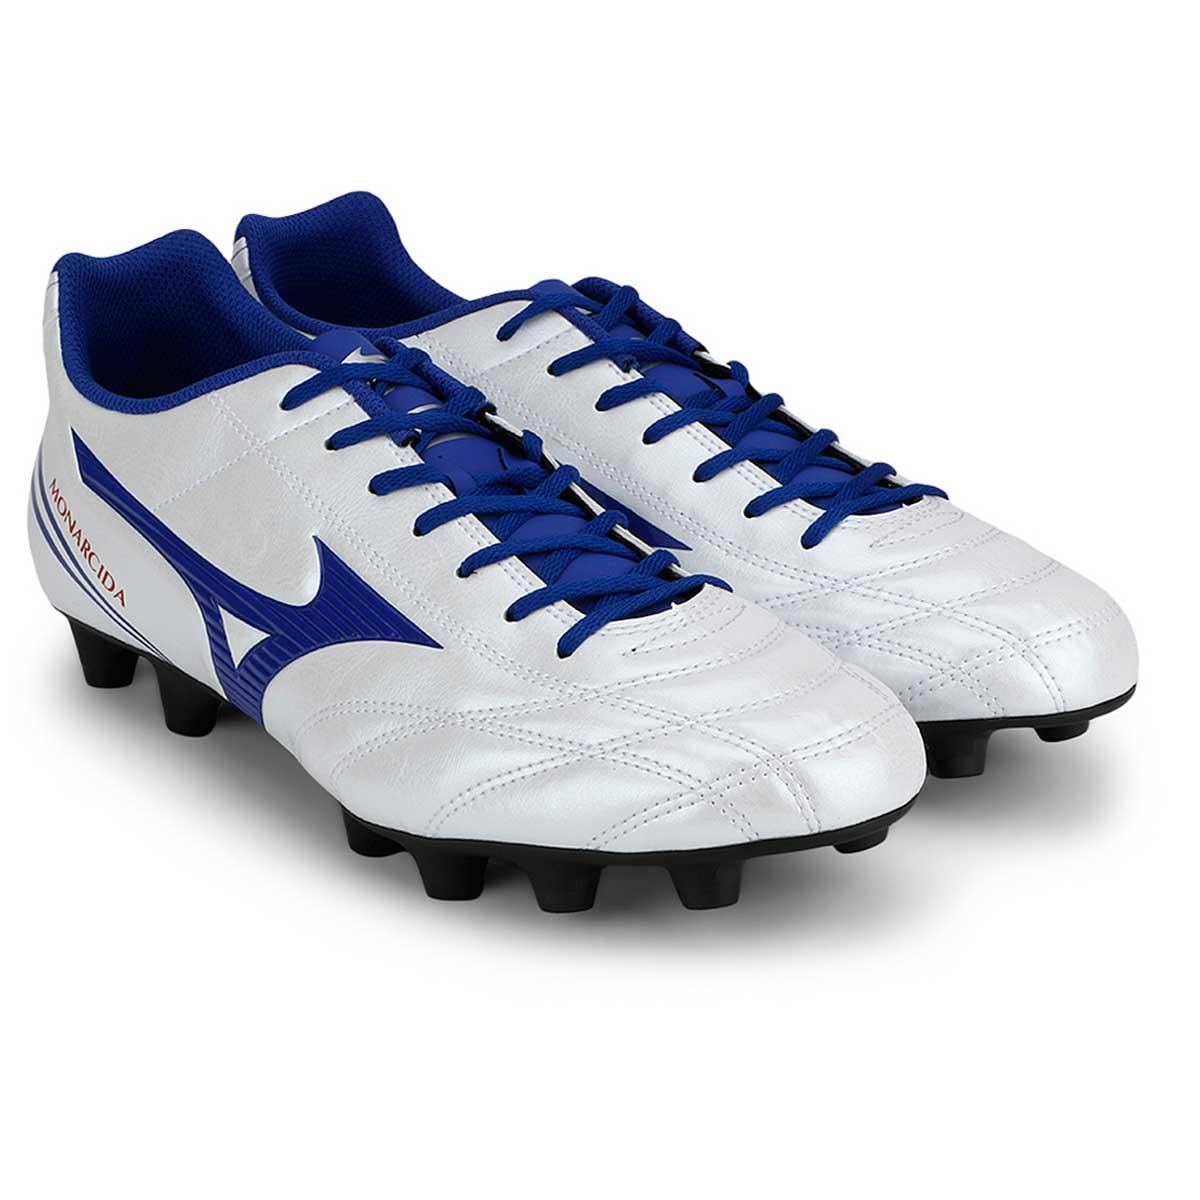 Buy Mizuno Monarcida MD Football Shoes (White/Blue/Red) Online